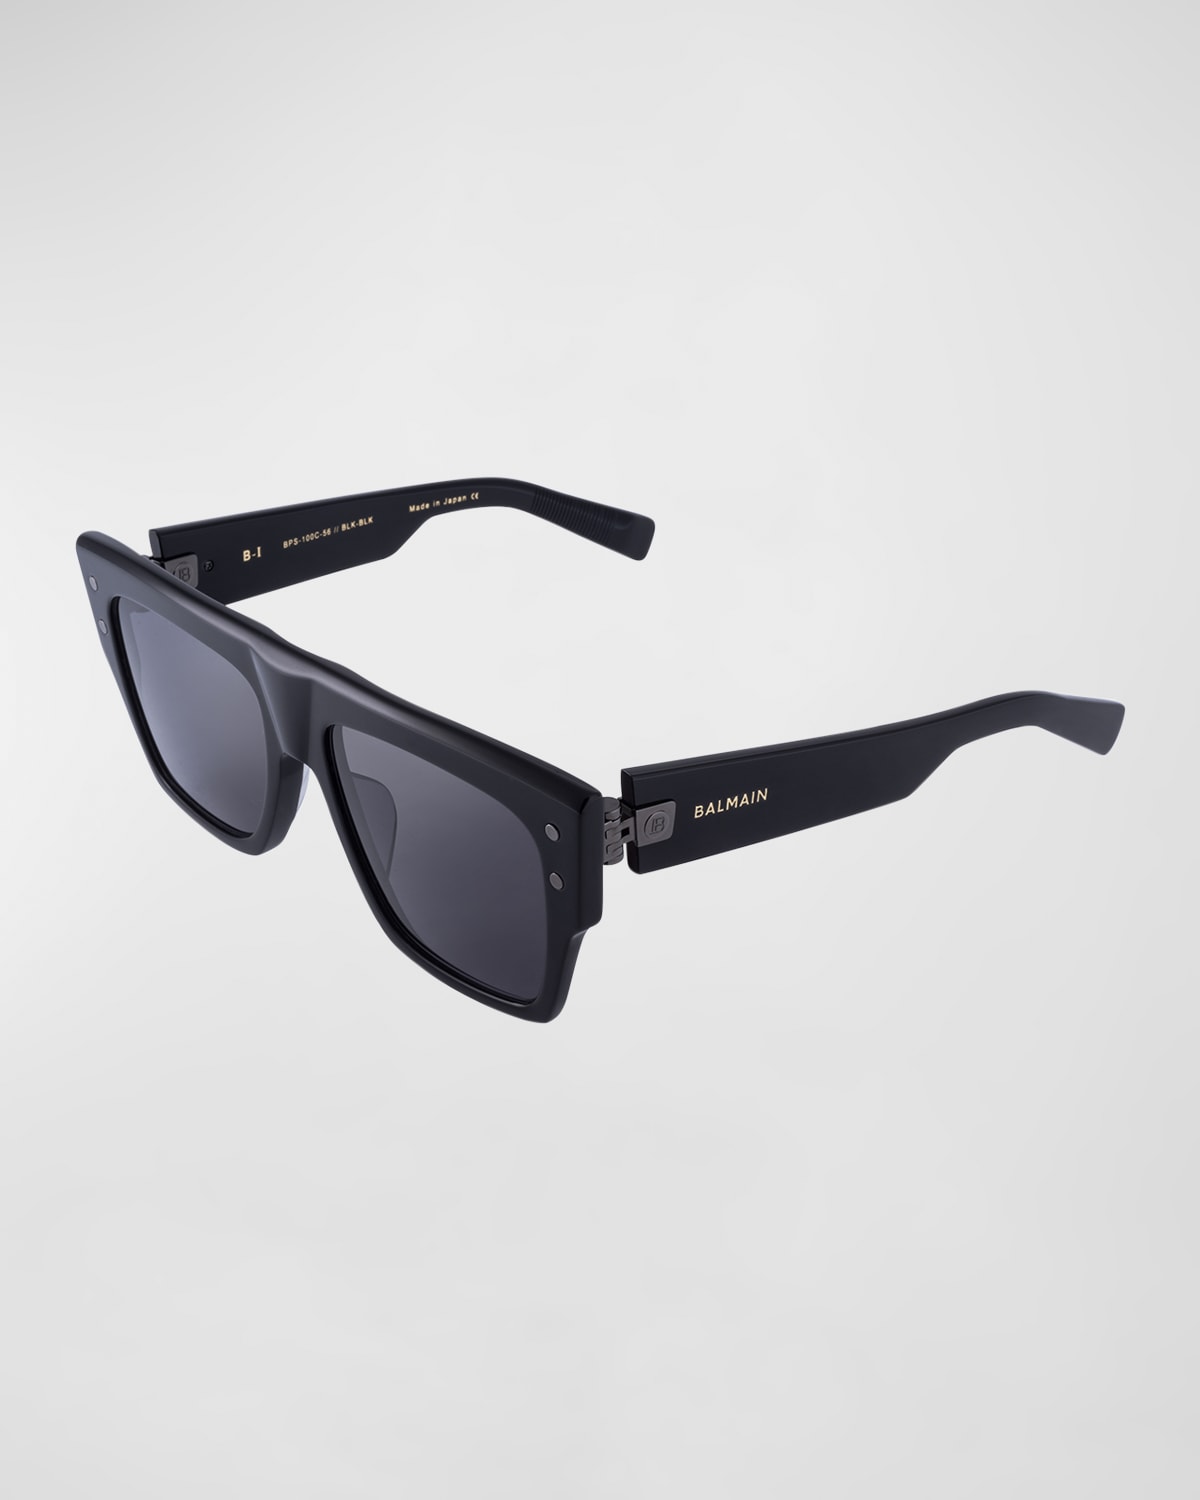 Balmain B-i Acetate Rectangle Sunglasses In Black